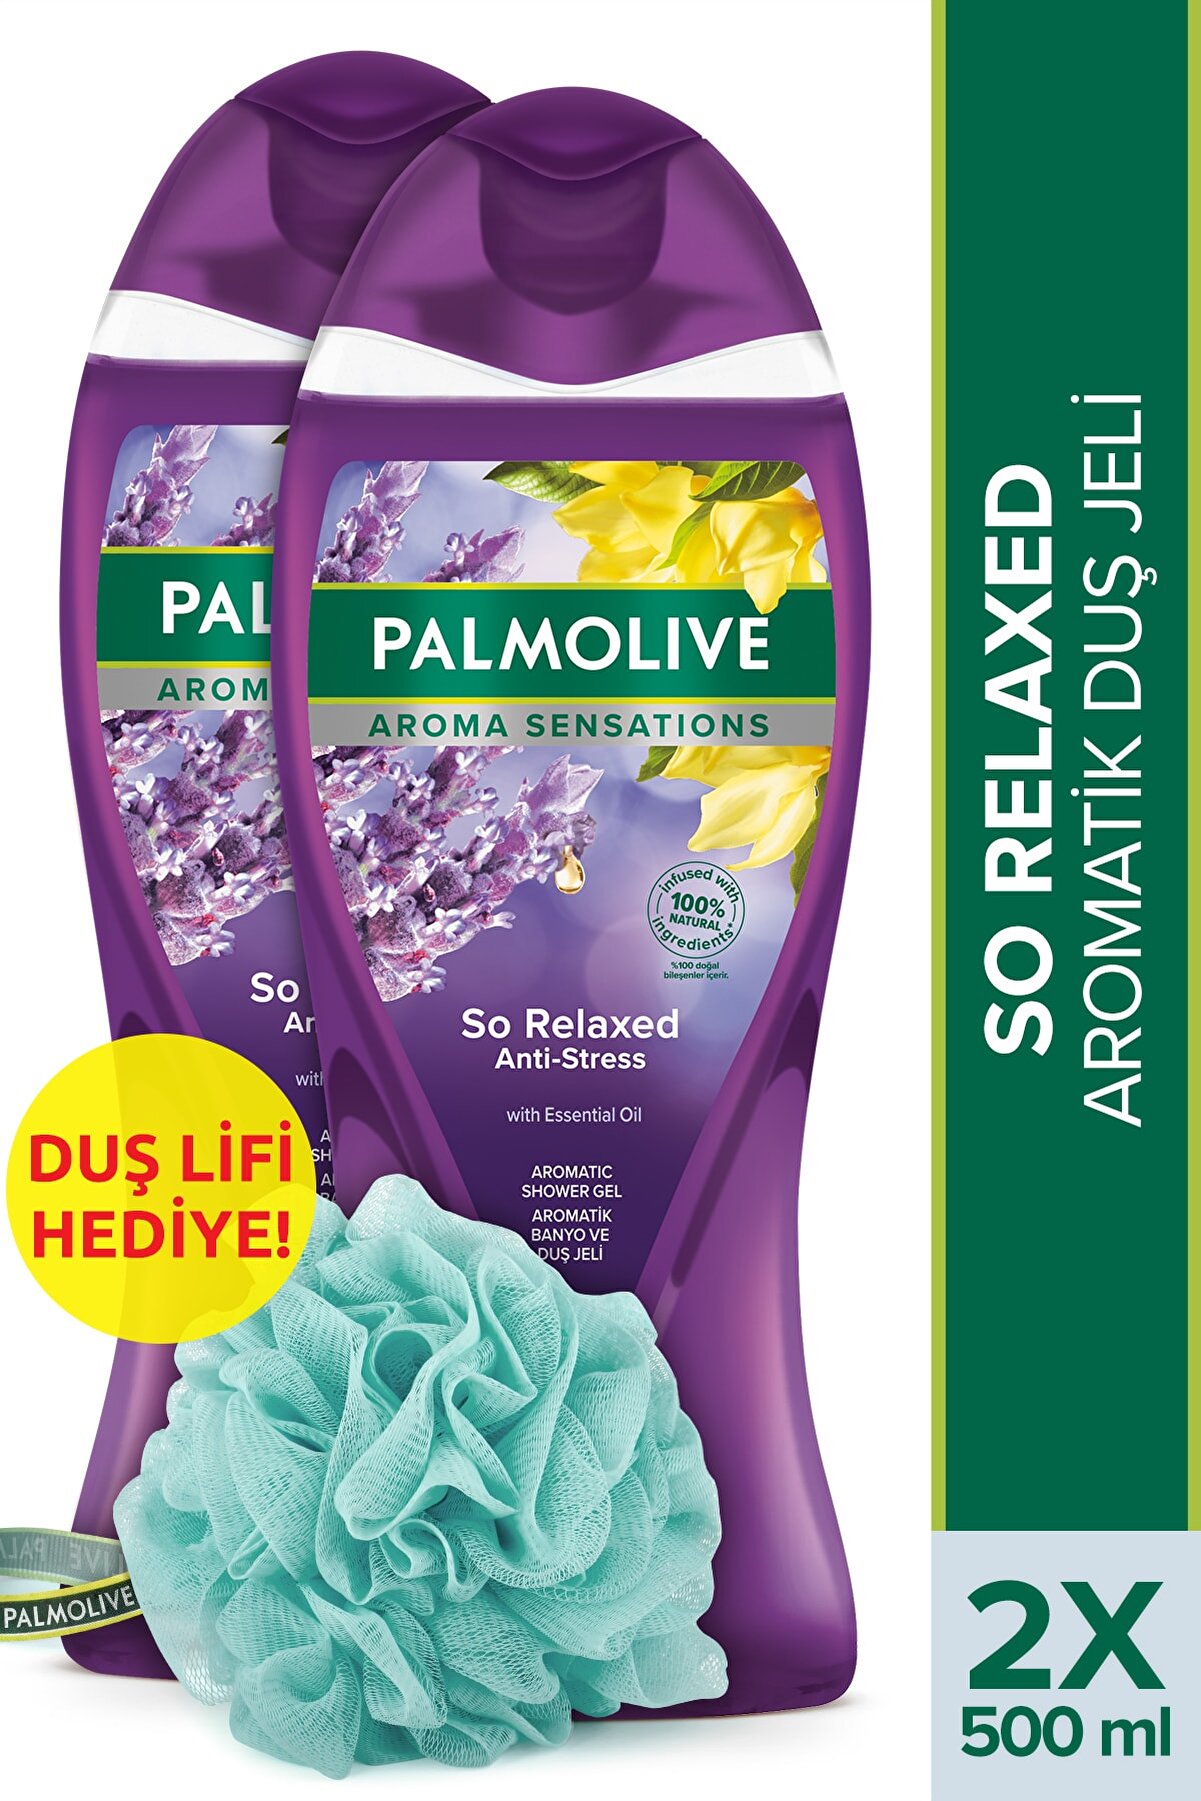 Palmolive Aroma Sensations So Relaxed Aromatik Banyo ve Duş Jeli 500 ml x 2 Adet + Duş Lifi Hediye